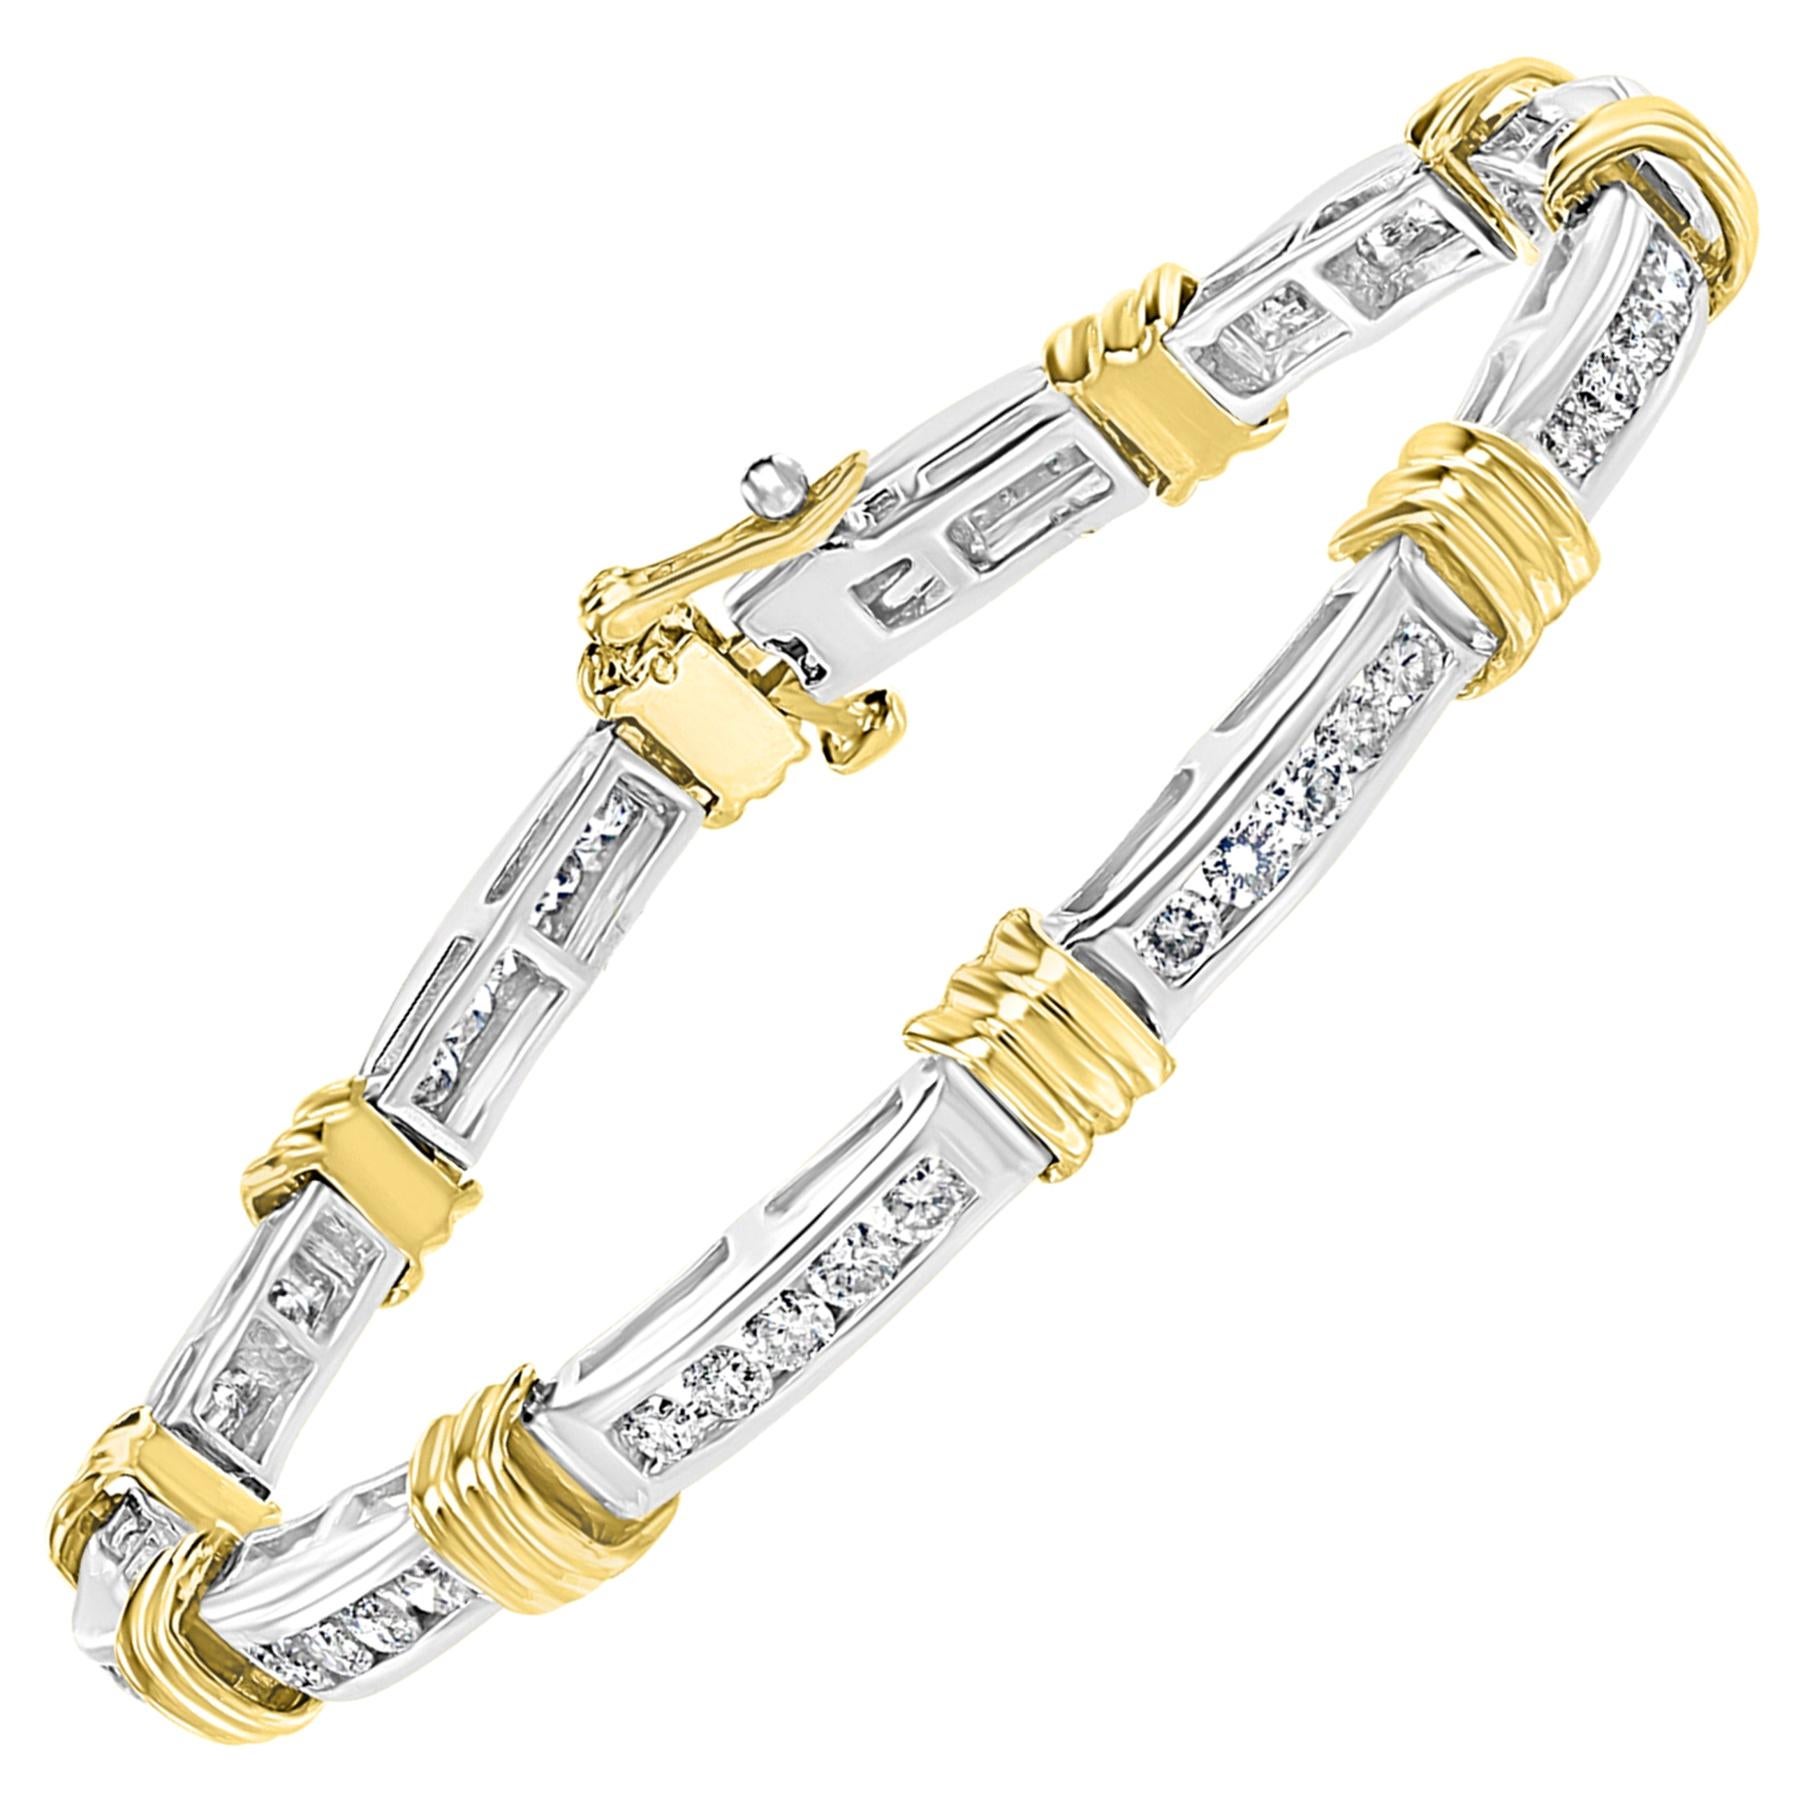 Two-Tone 2.8 Carat Diamond Bracelet in 14 Karat Yellow and White Gold, Estate For Sale